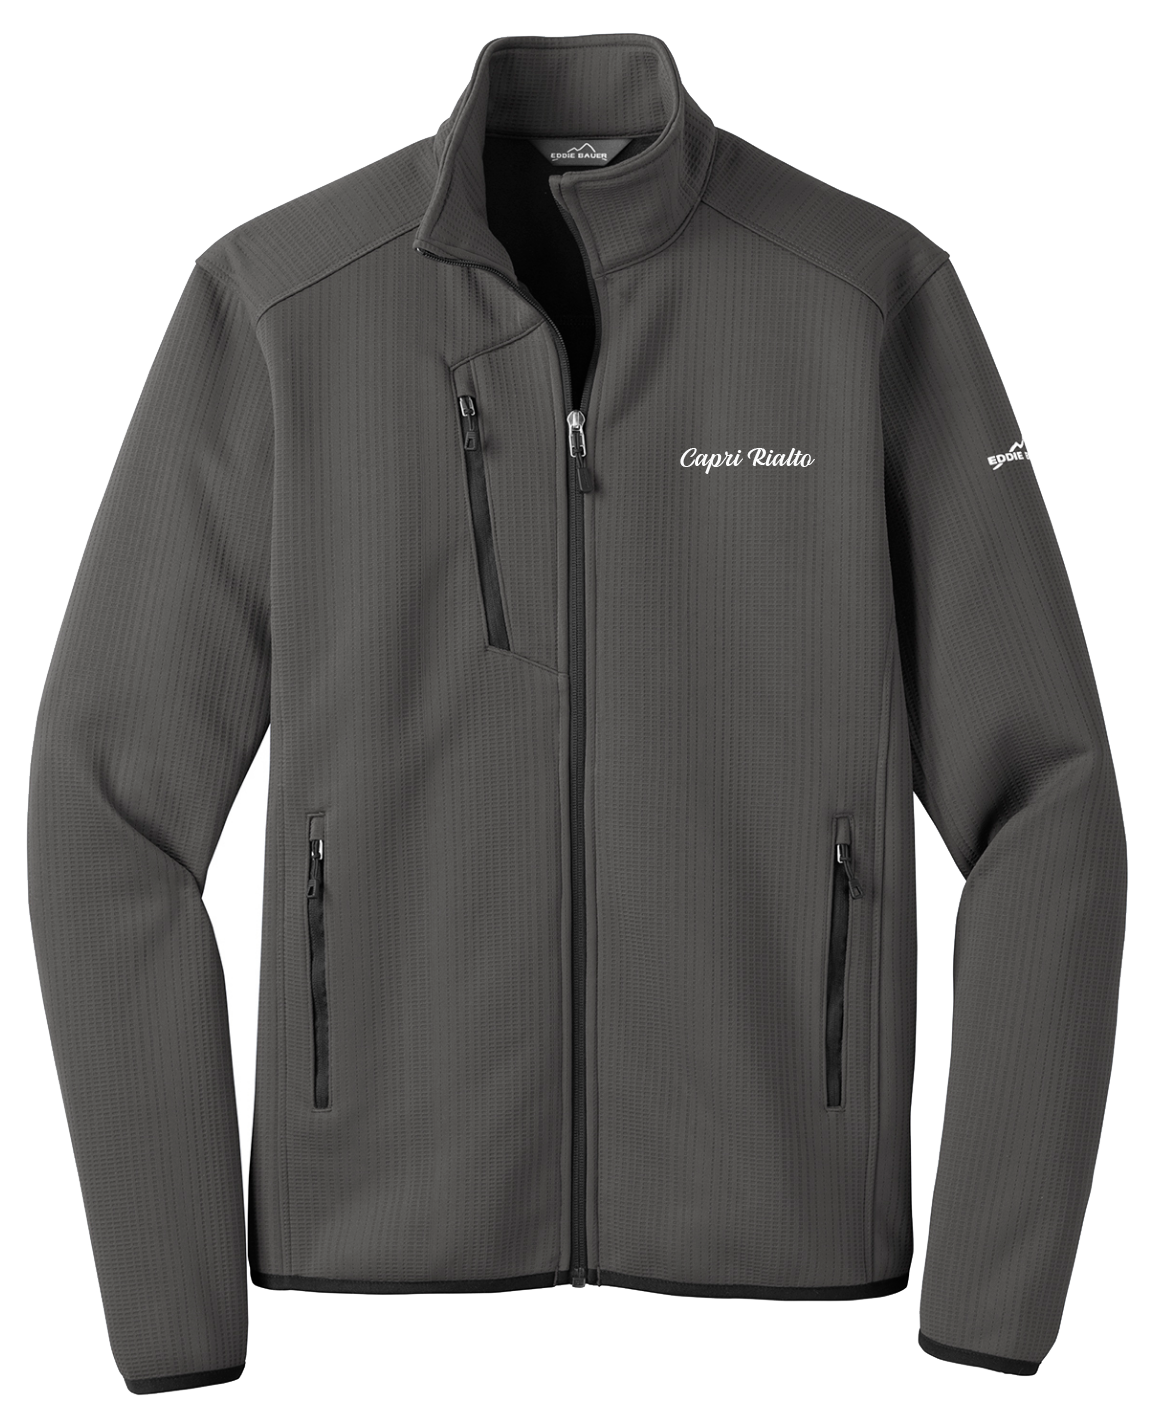 Capri Rialto - Mens - Eddie Bauer ® Dash Full-Zip Fleece Jacket